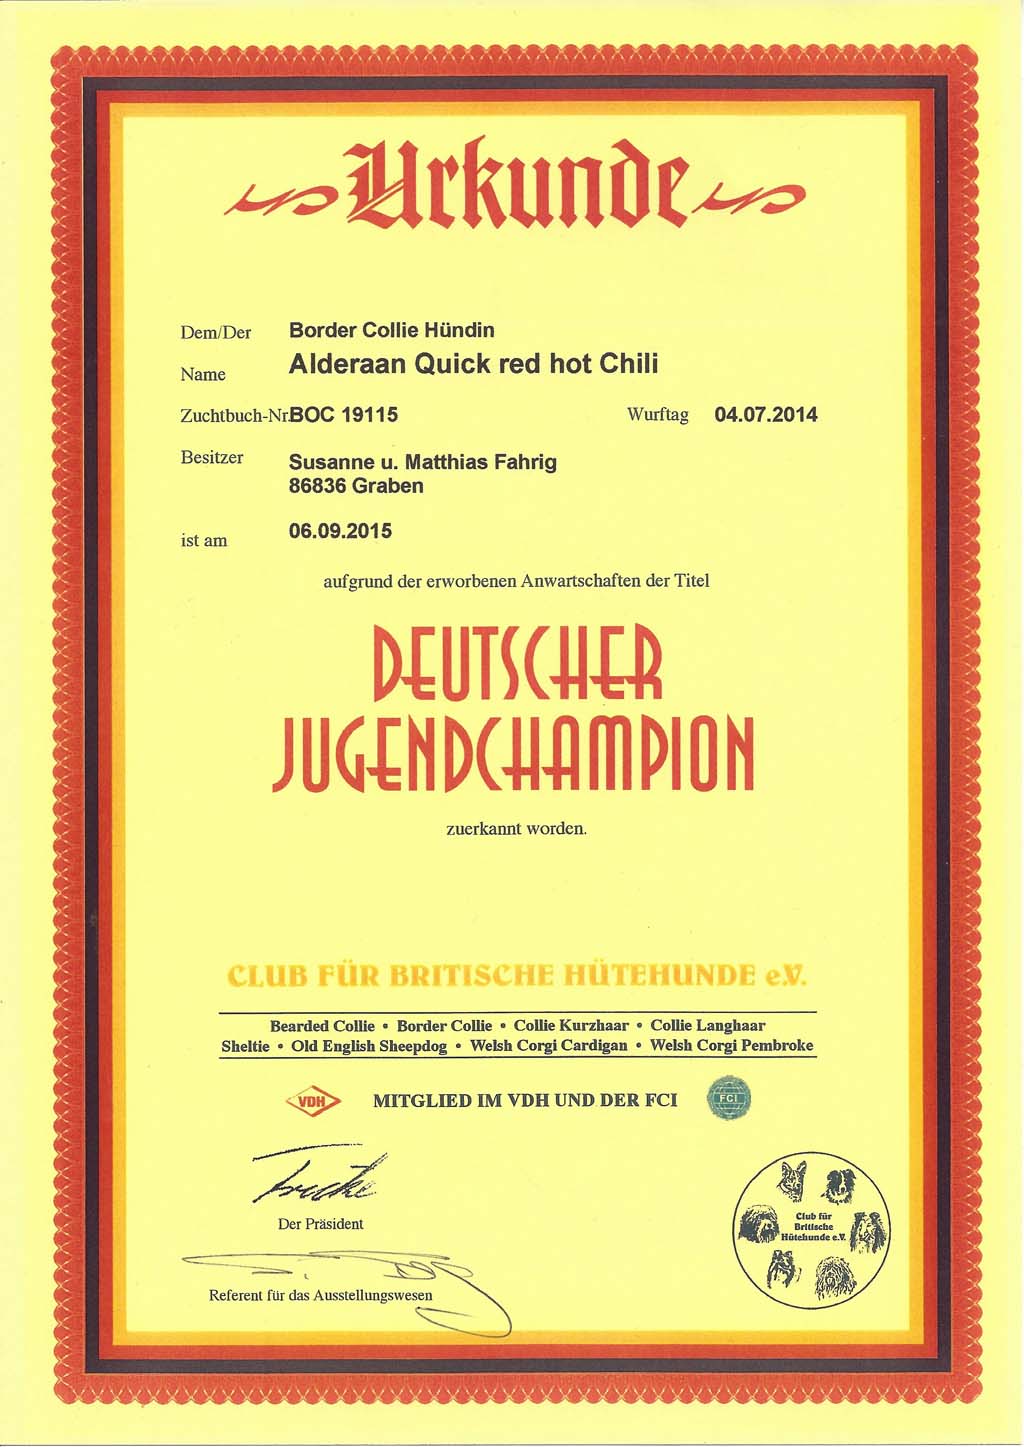 Alderaan Quick redt hot Chili Jgd Champion Club 1024x1447